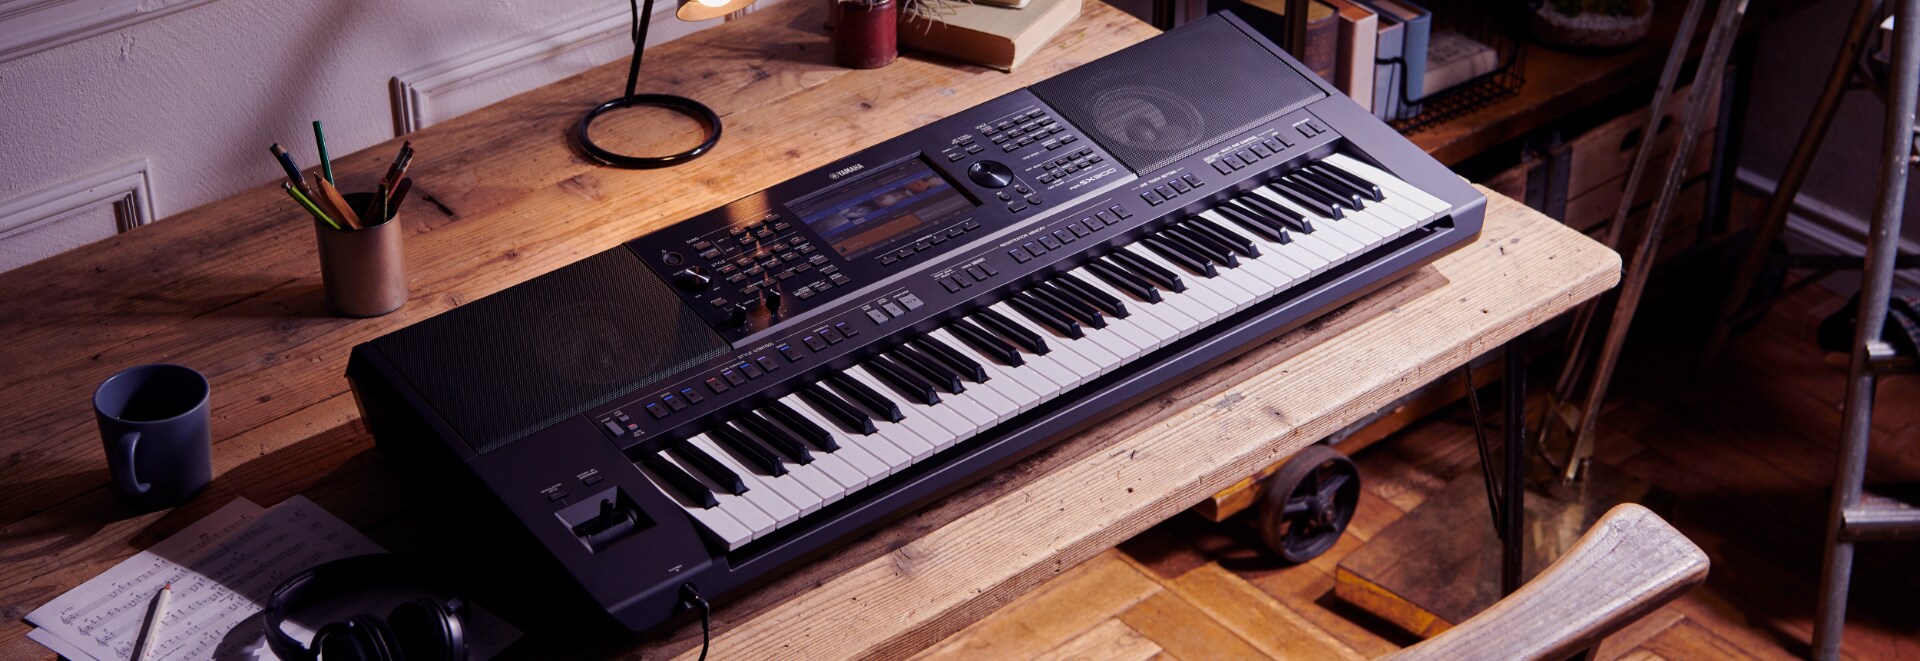 Yamaha PSR-SX900 Arranger Keyboard Pakkeløsning